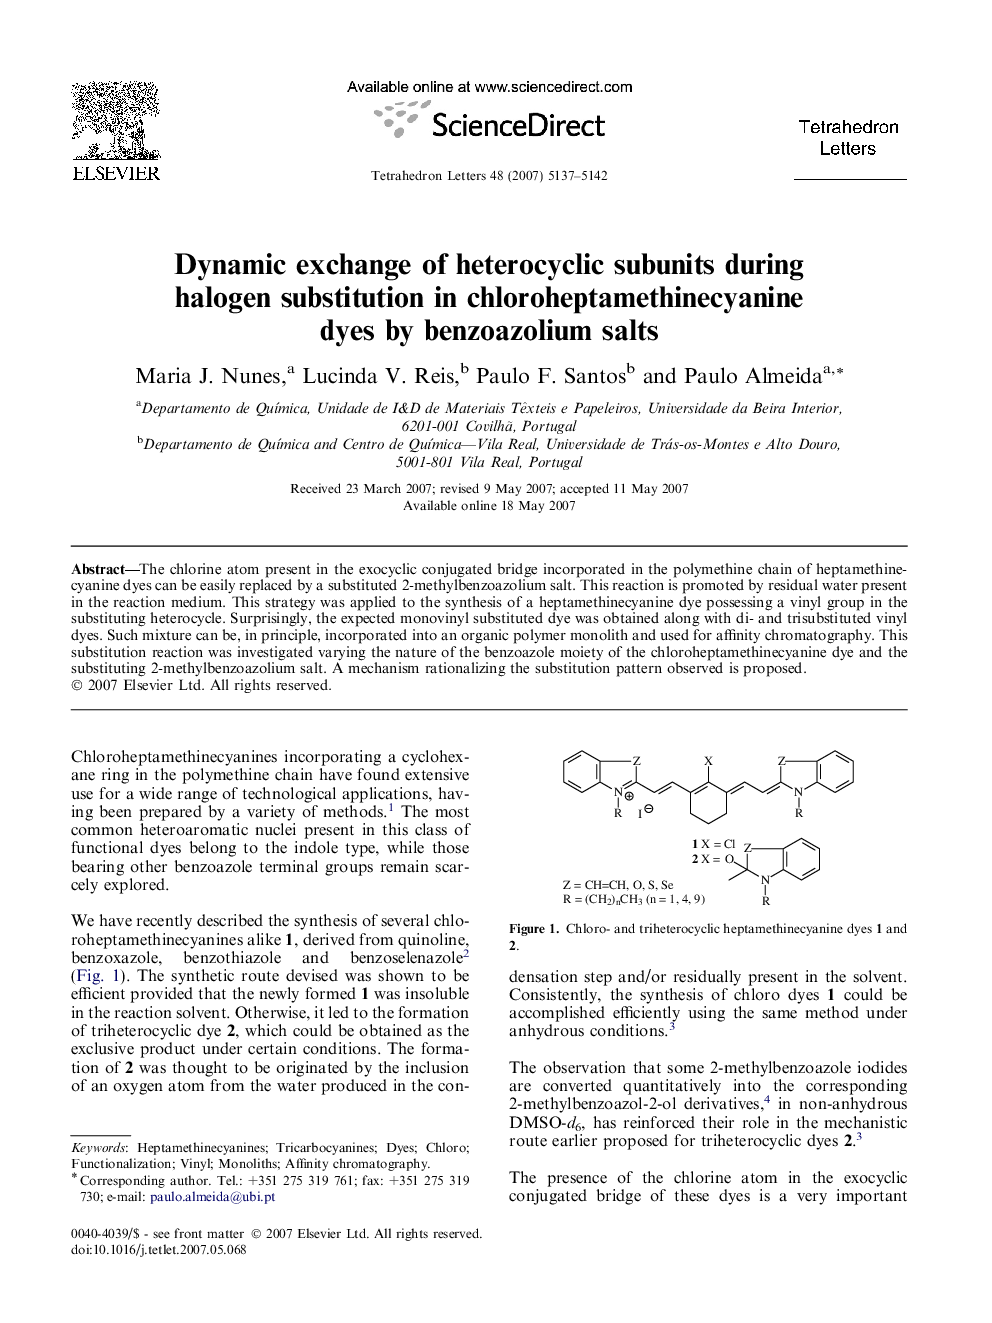 Dynamic exchange of heterocyclic subunits during halogen substitution in chloroheptamethinecyanine dyes by benzoazolium salts